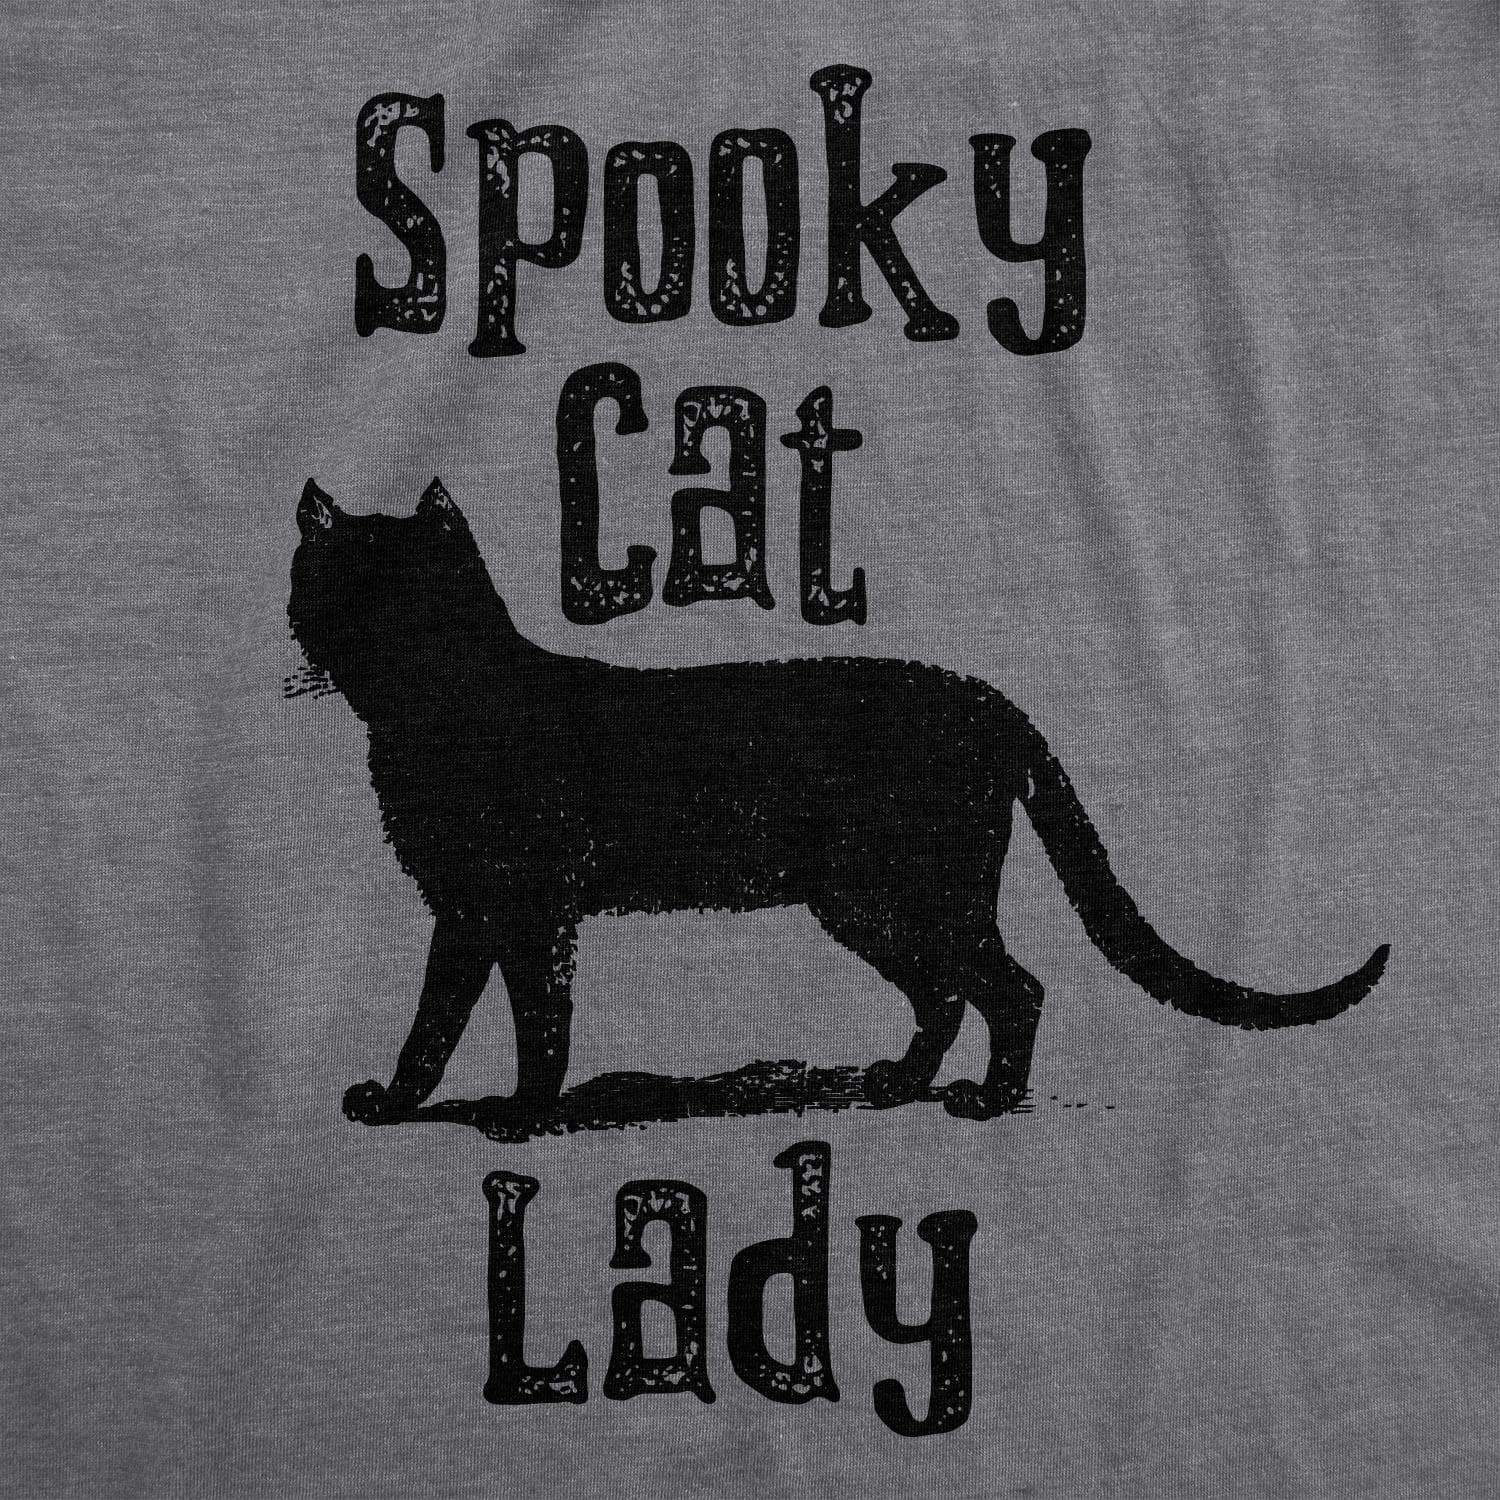 Spooky Cat Lady Women's Tshirt - Crazy Dog T-Shirts